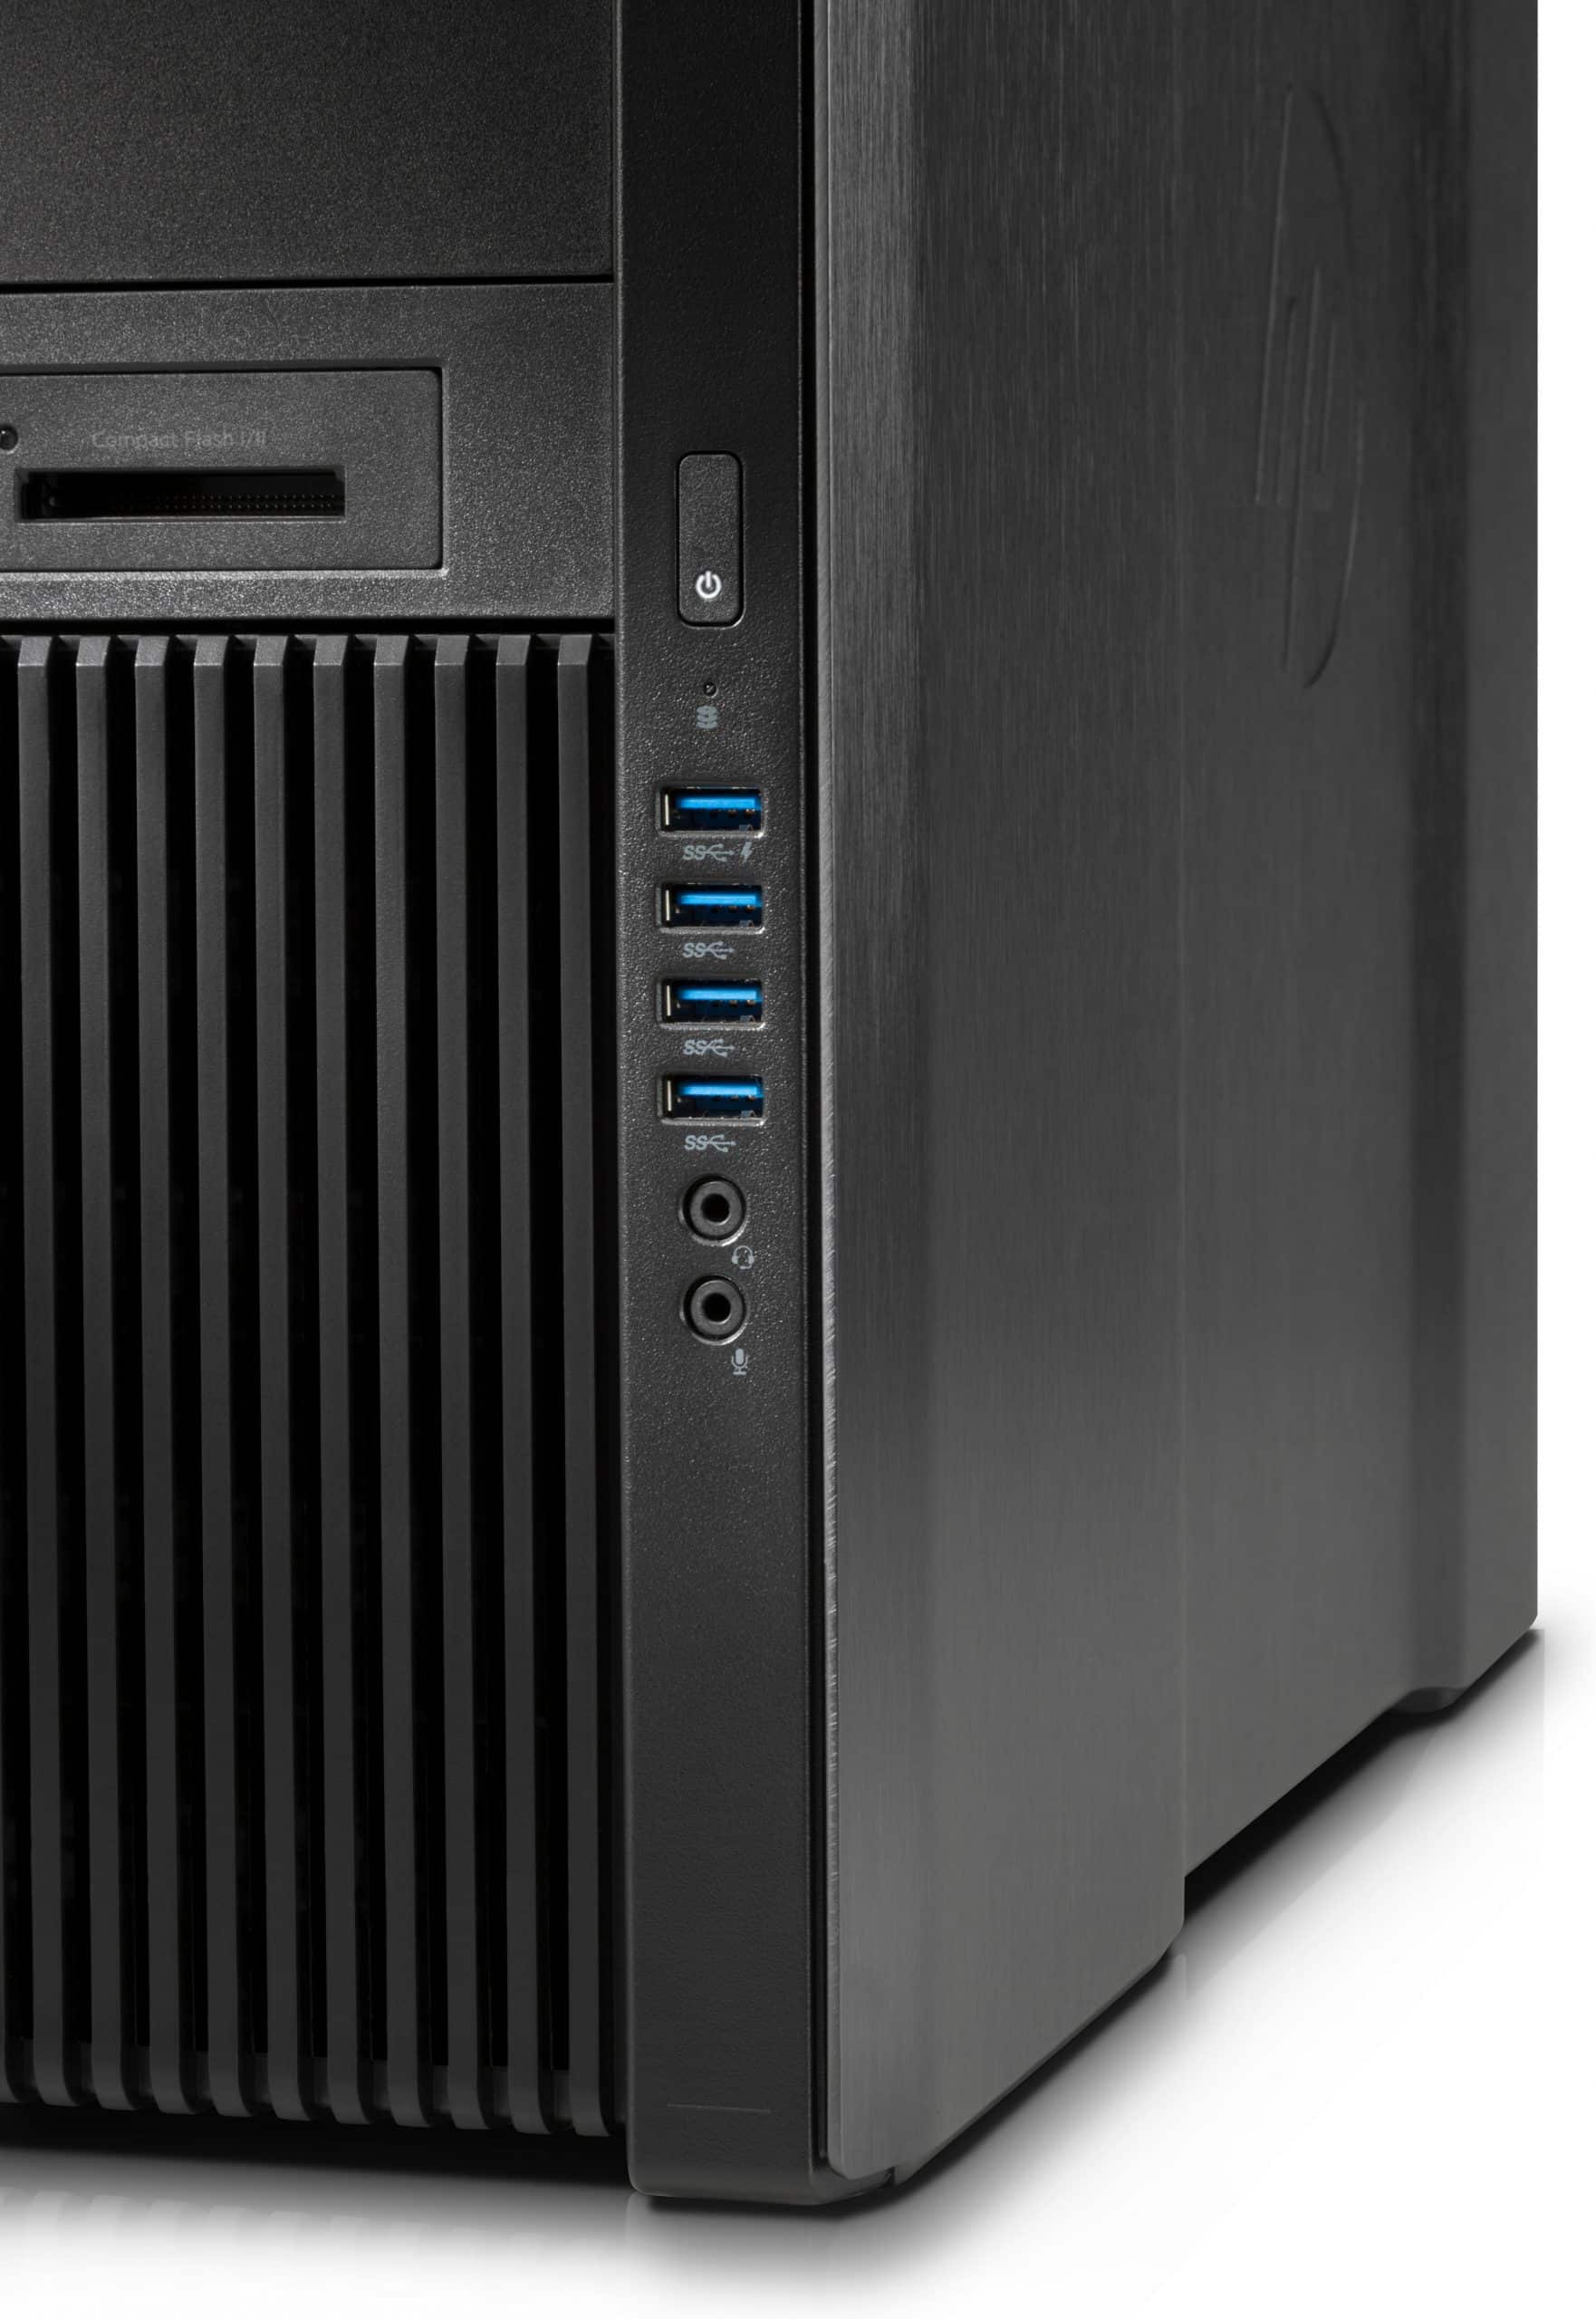 HP Z840 Workstation | Intel Xeon E5-2620 V3 6Cores | Ram 32Gb | SSD 480Gb + 12Tb SAS Mechanical | Nvidia Quadro P2000 | Windows 11 Pro All-purpose computing power